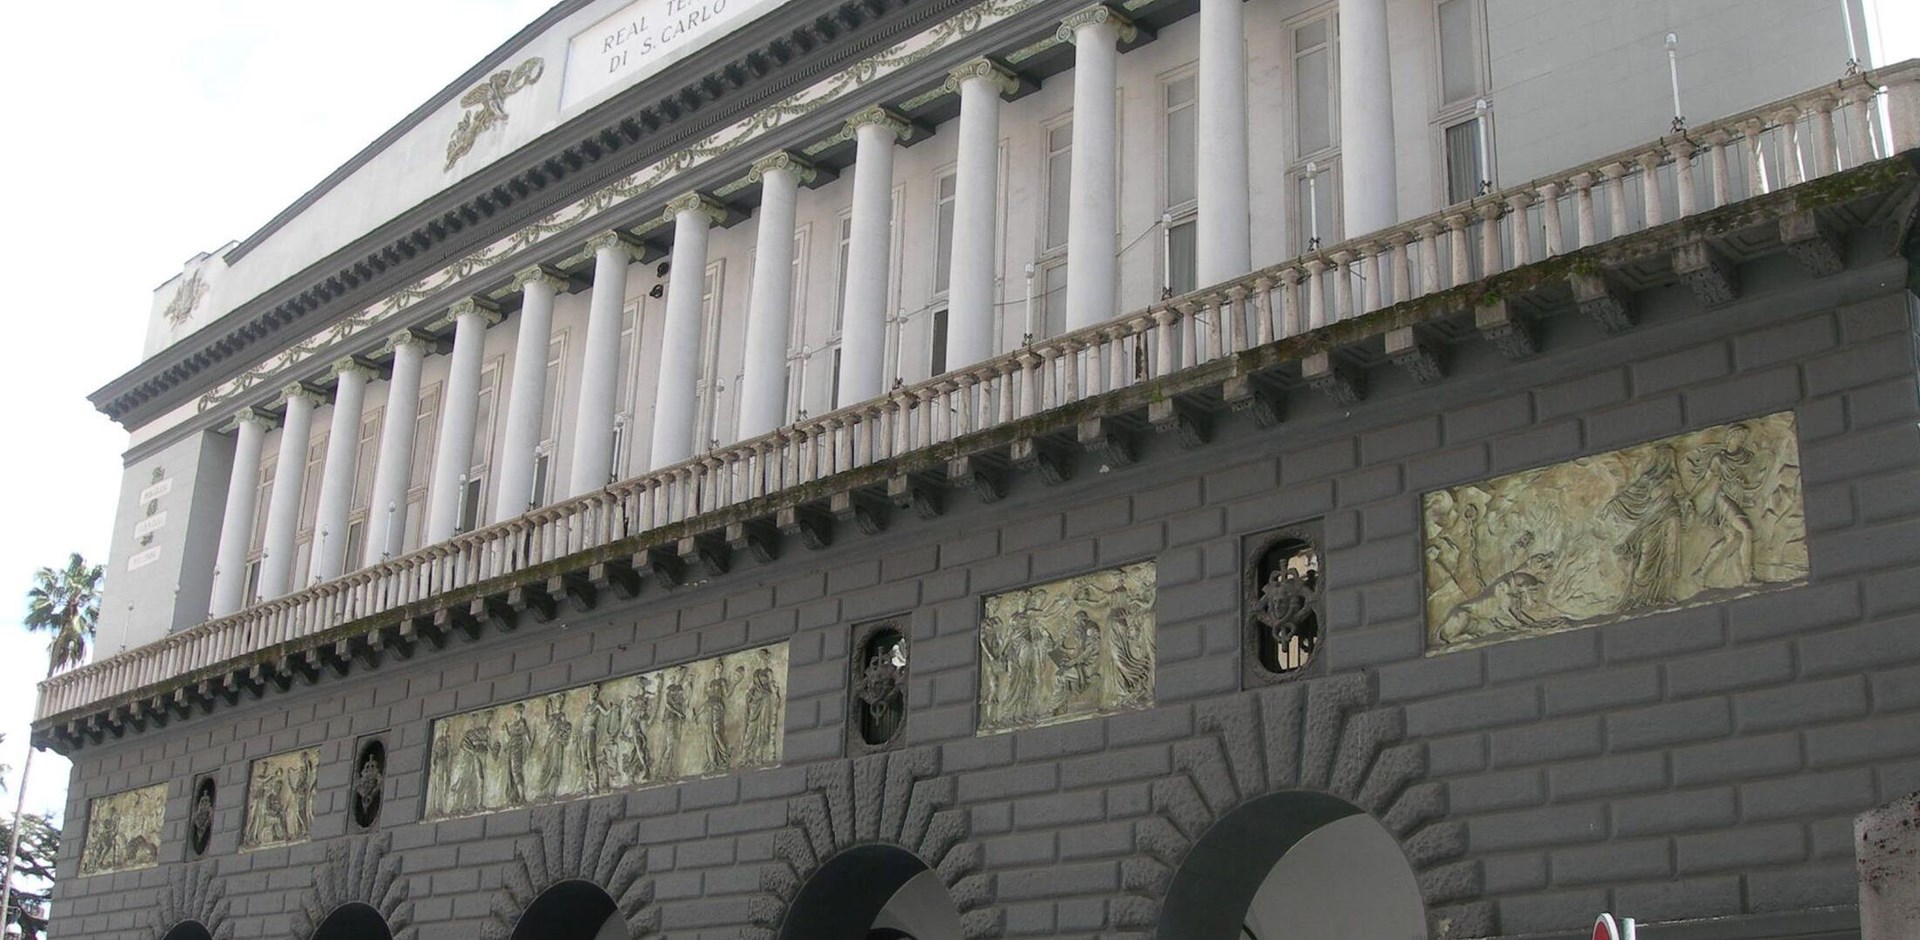 Naples â€“ Teatro San Carlo theatre facade in neoclassical style famous for opera